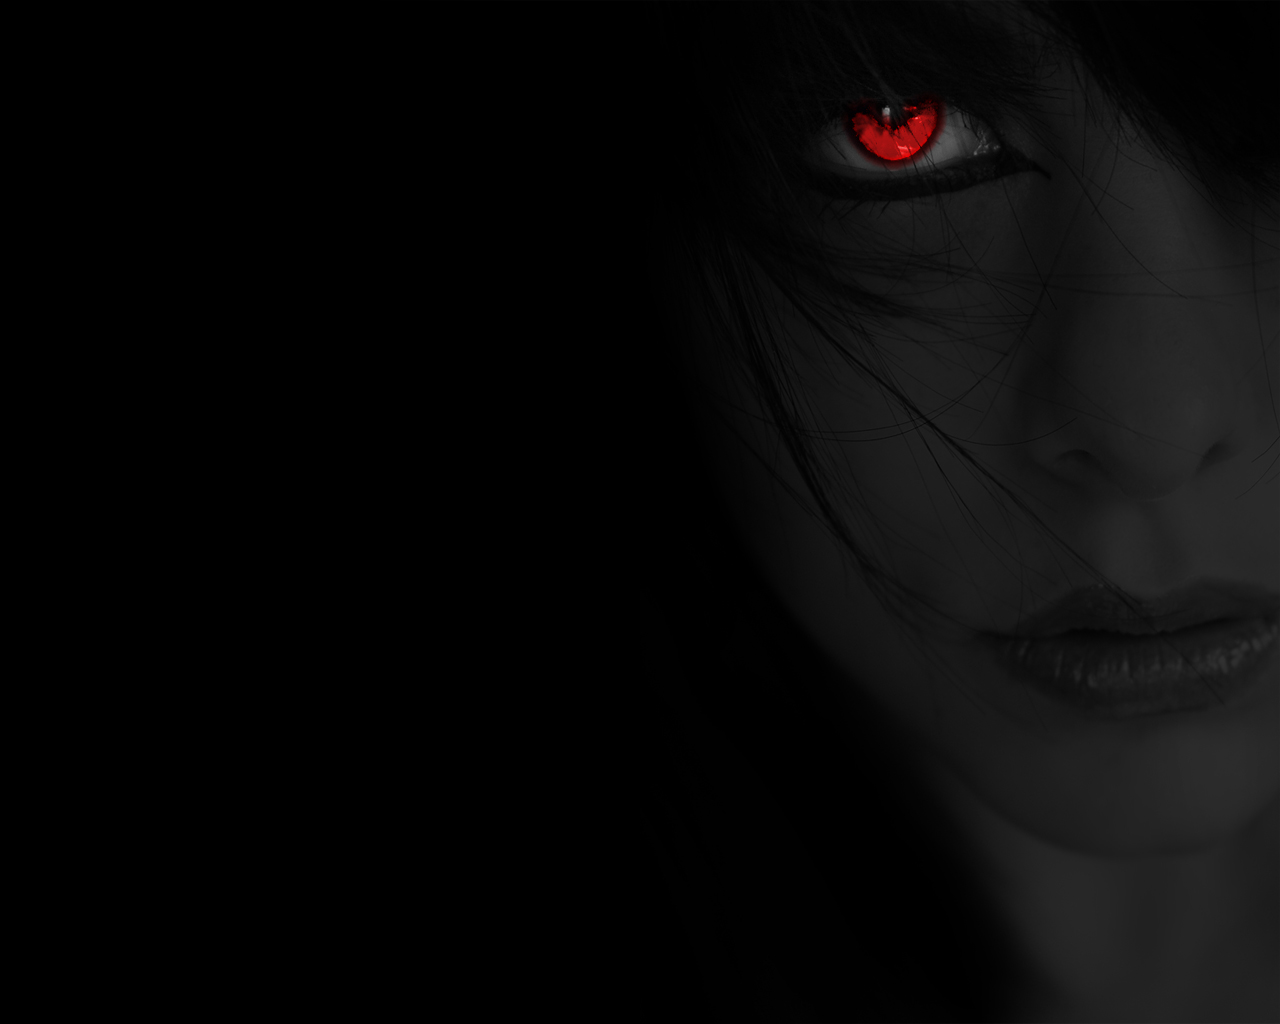 black, red eyes, gothic, women, eye, creepy cellphone